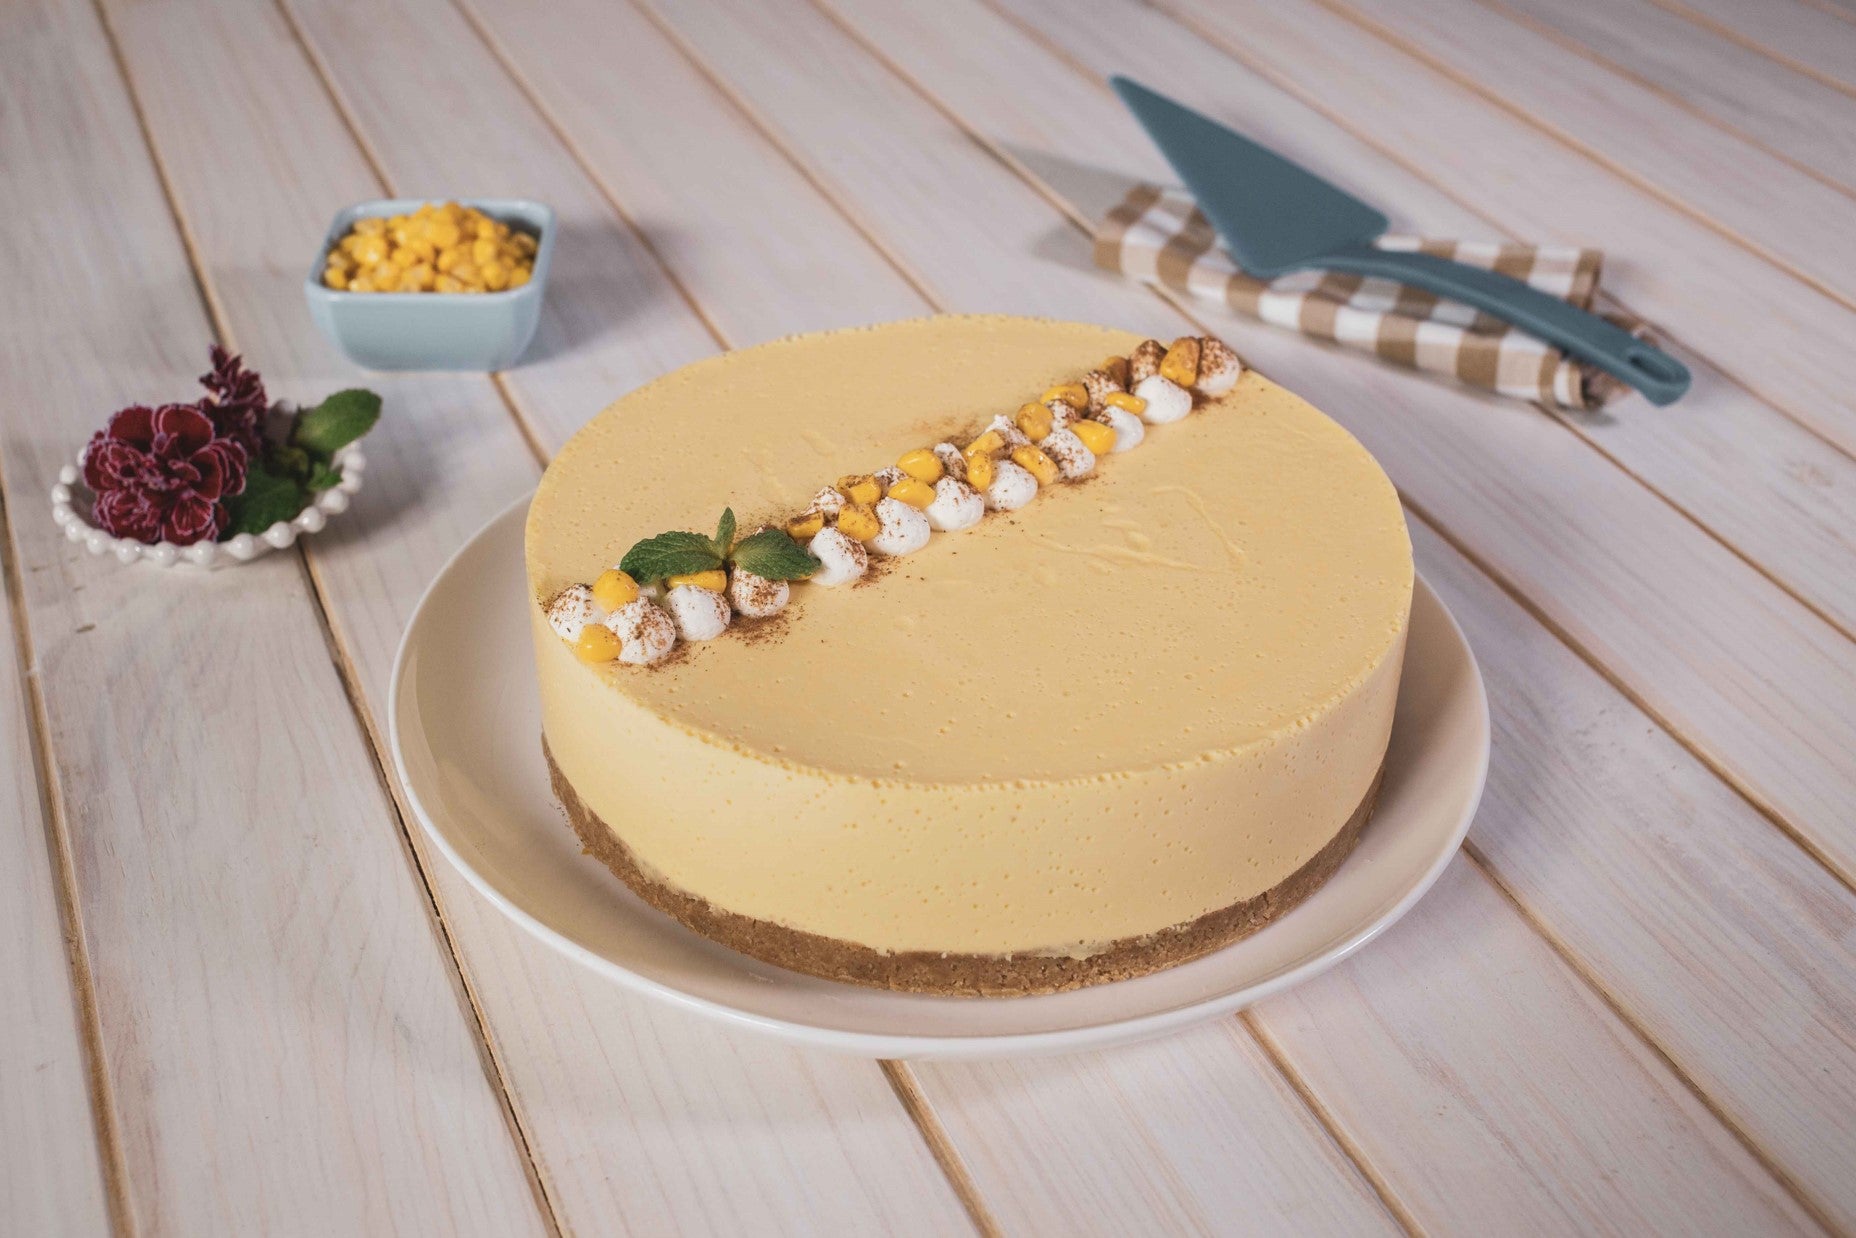 Cheesecake de elote con rompope | Recetas Nestlé